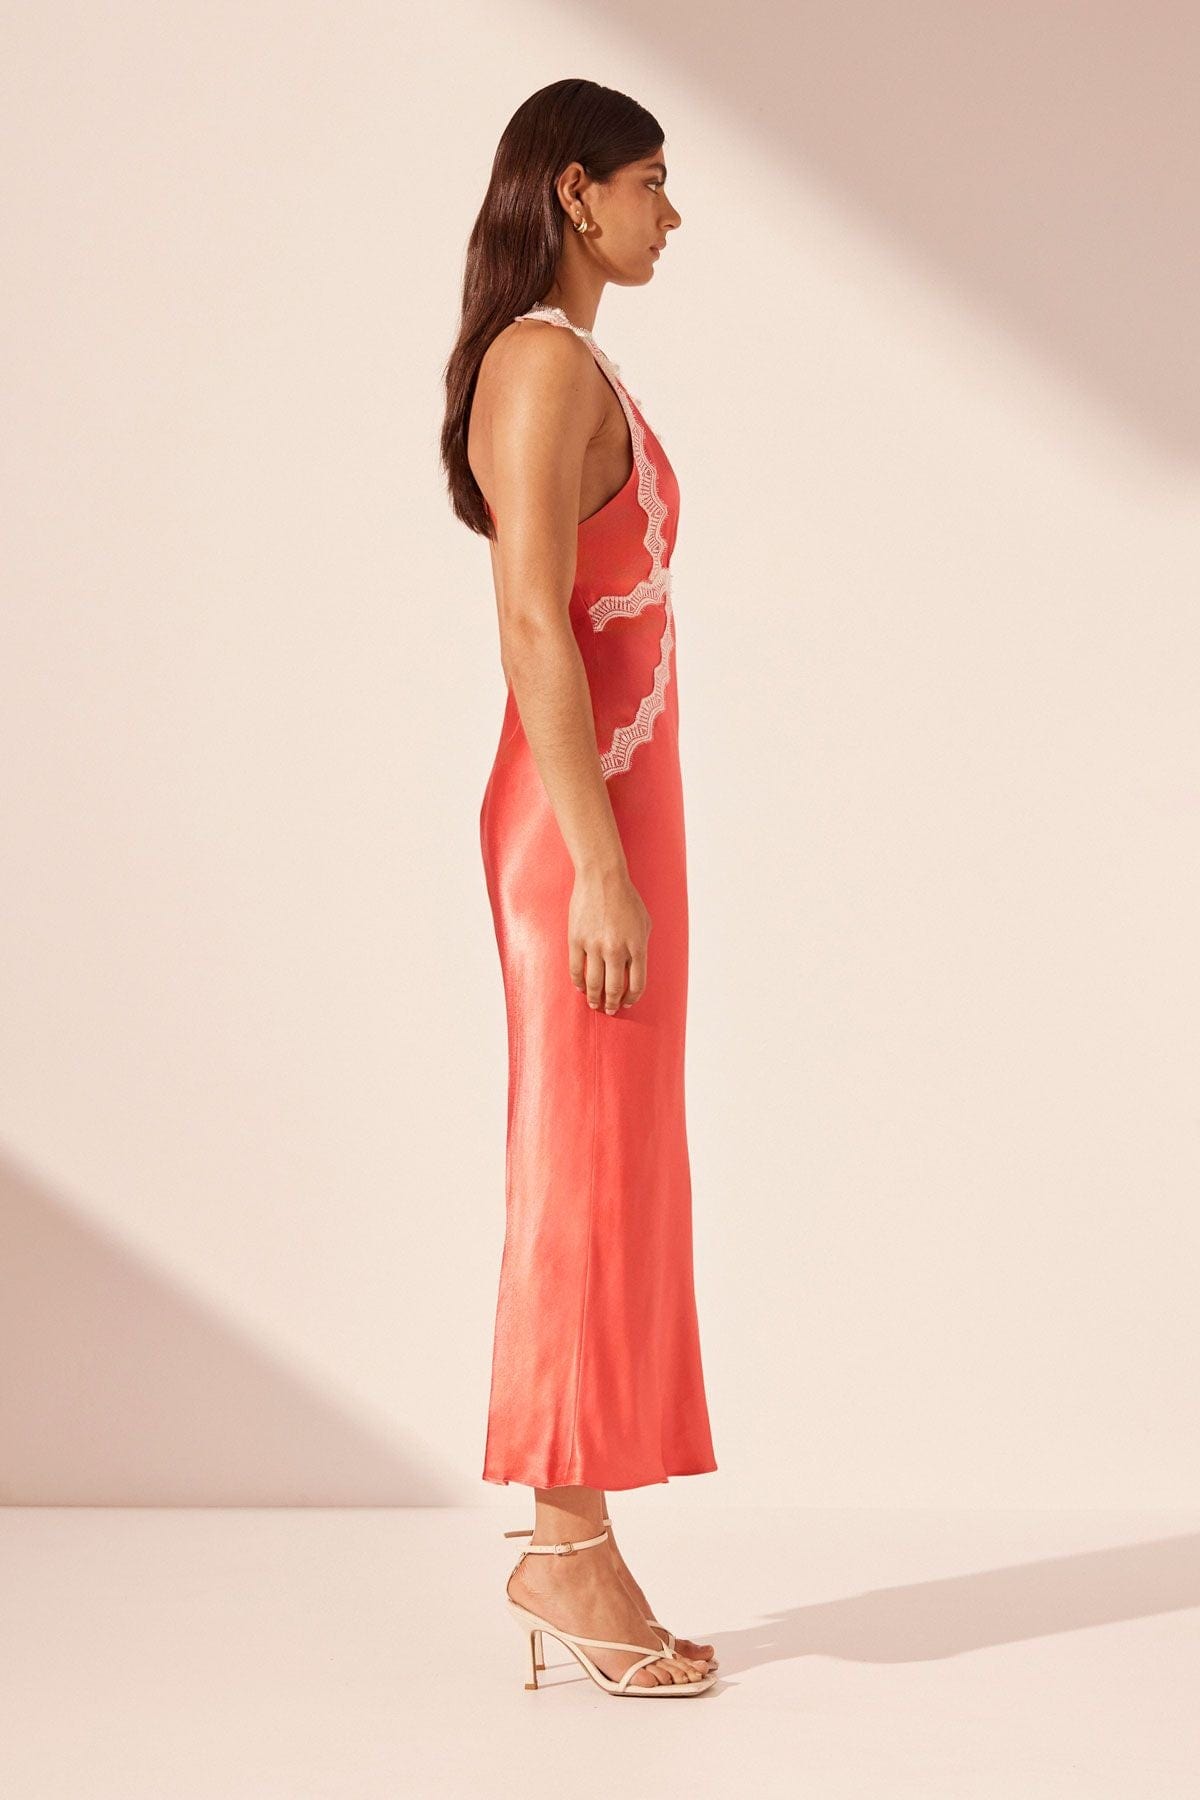 Shona Joy Dresses - Formal Shona Joy | Camille Lace Cross Back Midi Dress - Poppy Red